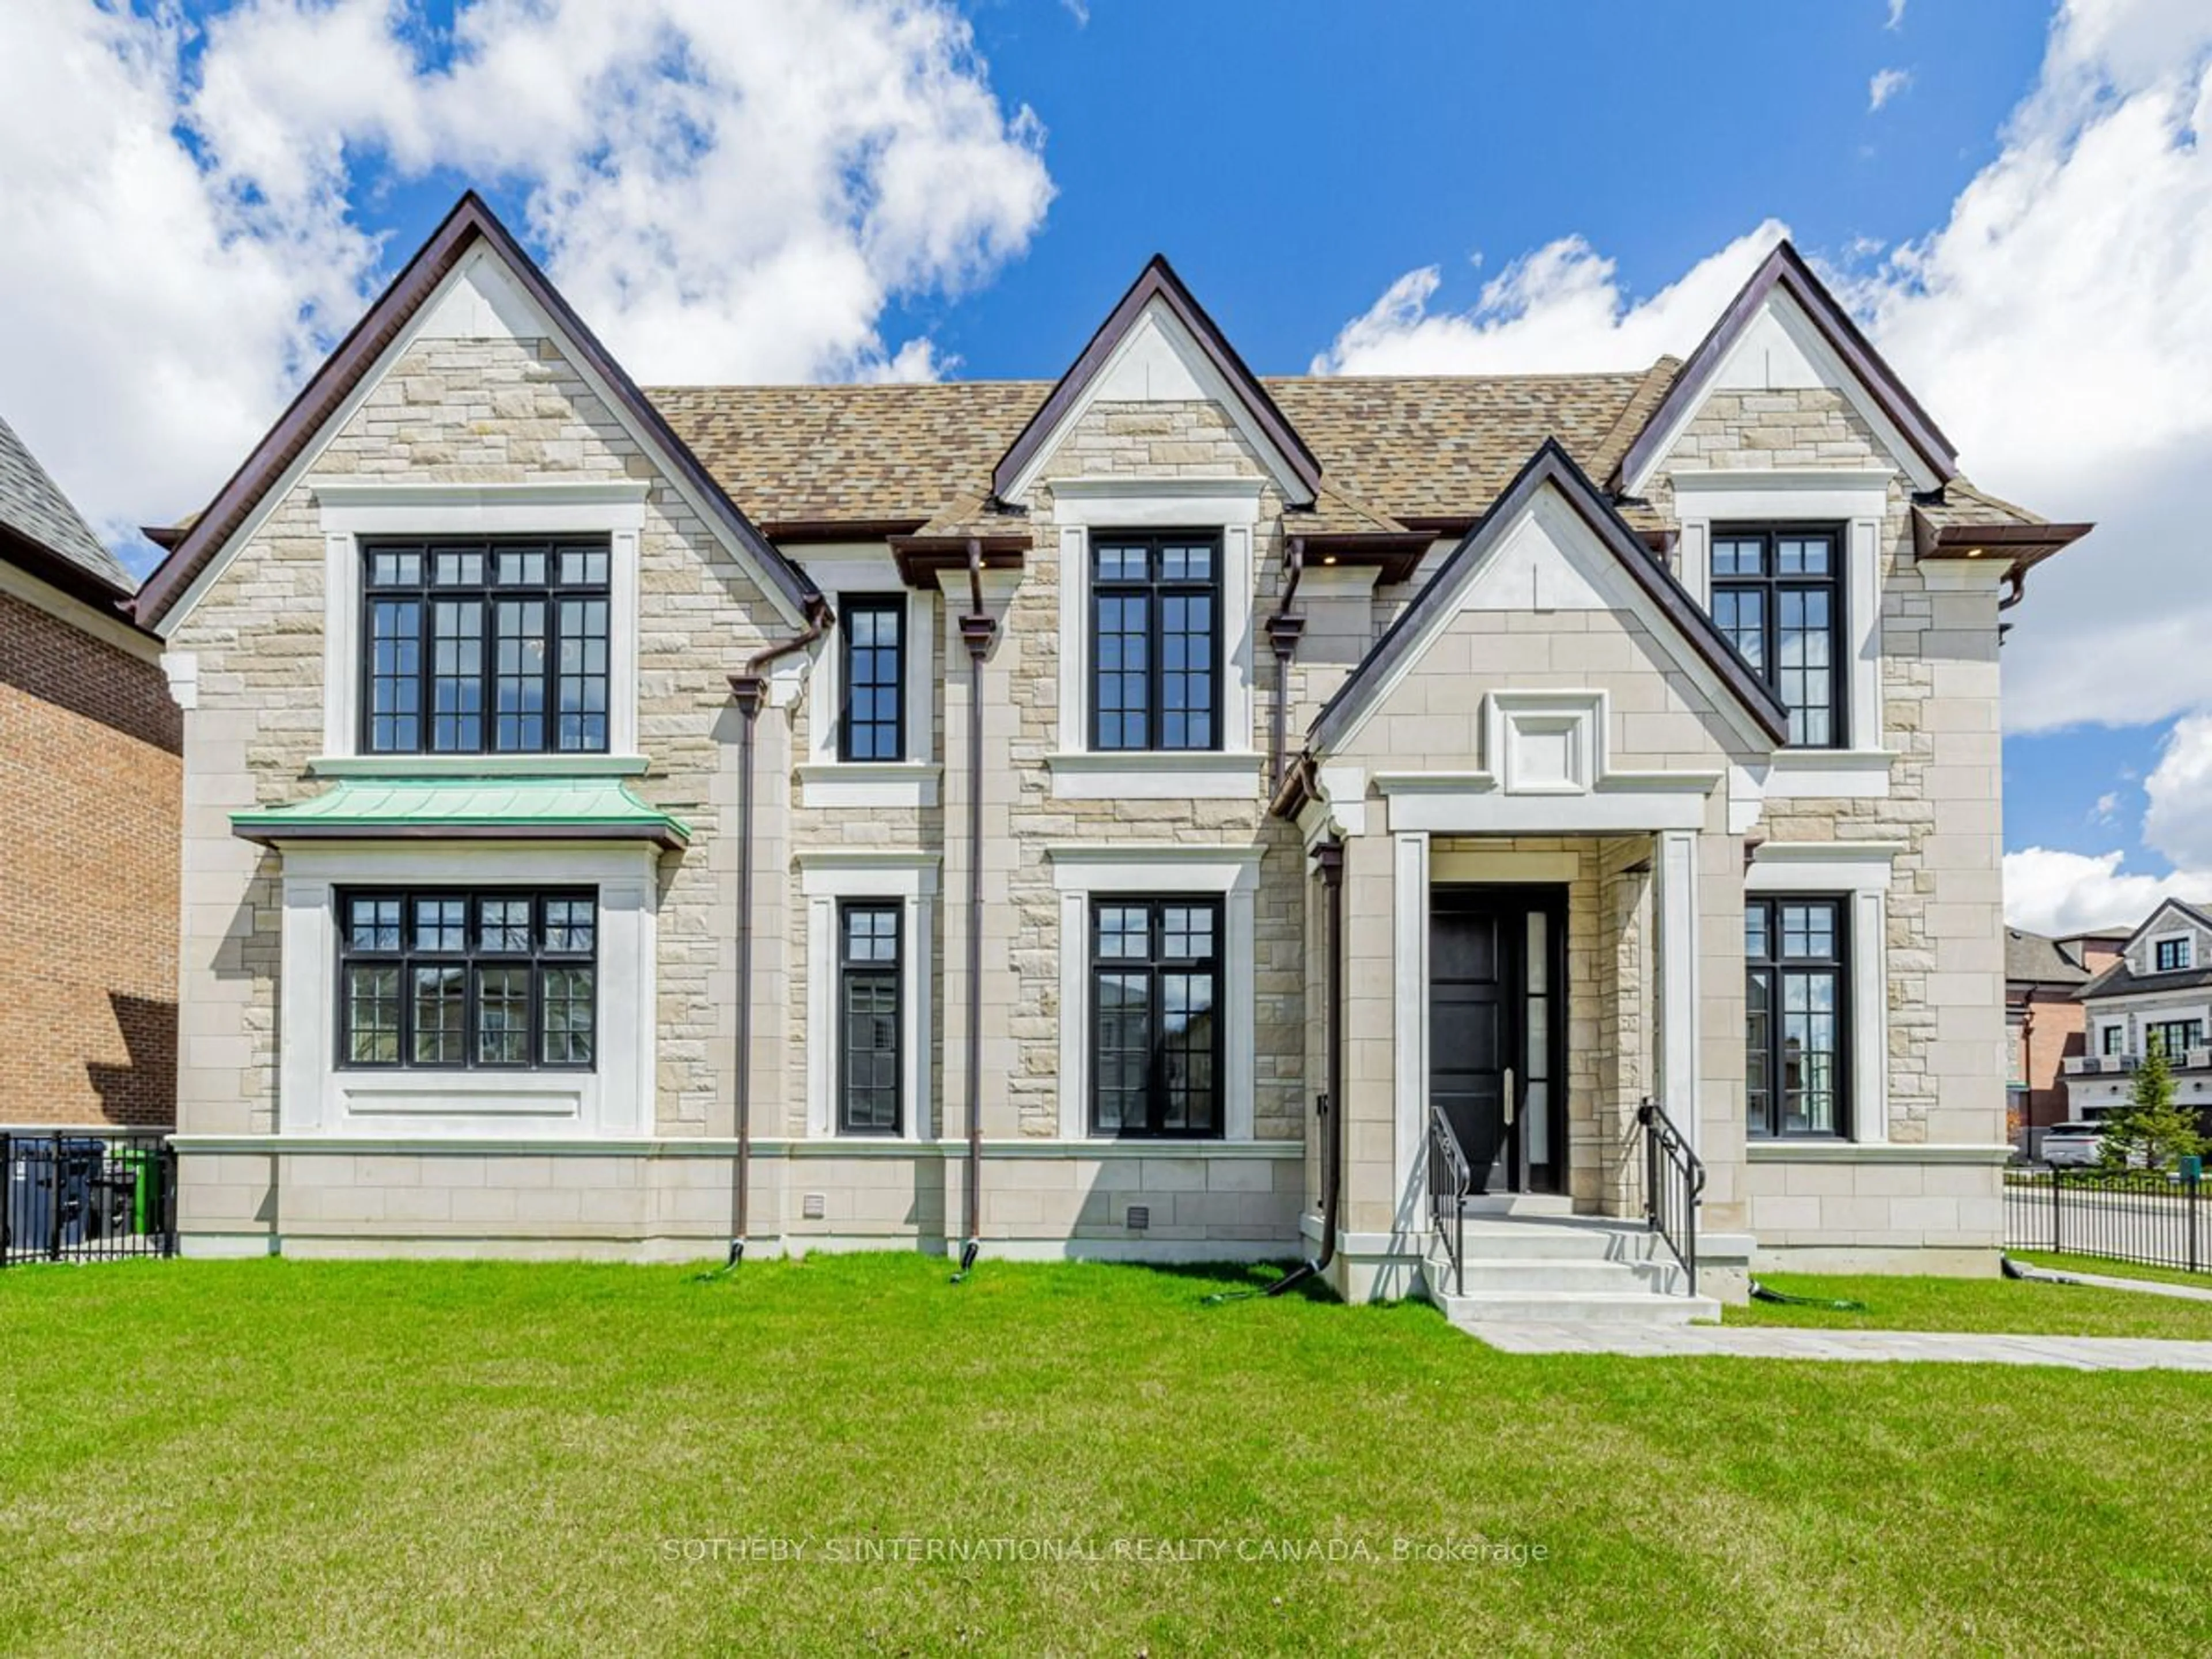 Home with brick exterior material for 29 Ballyconnor Crt, Toronto Ontario M2M 4C6